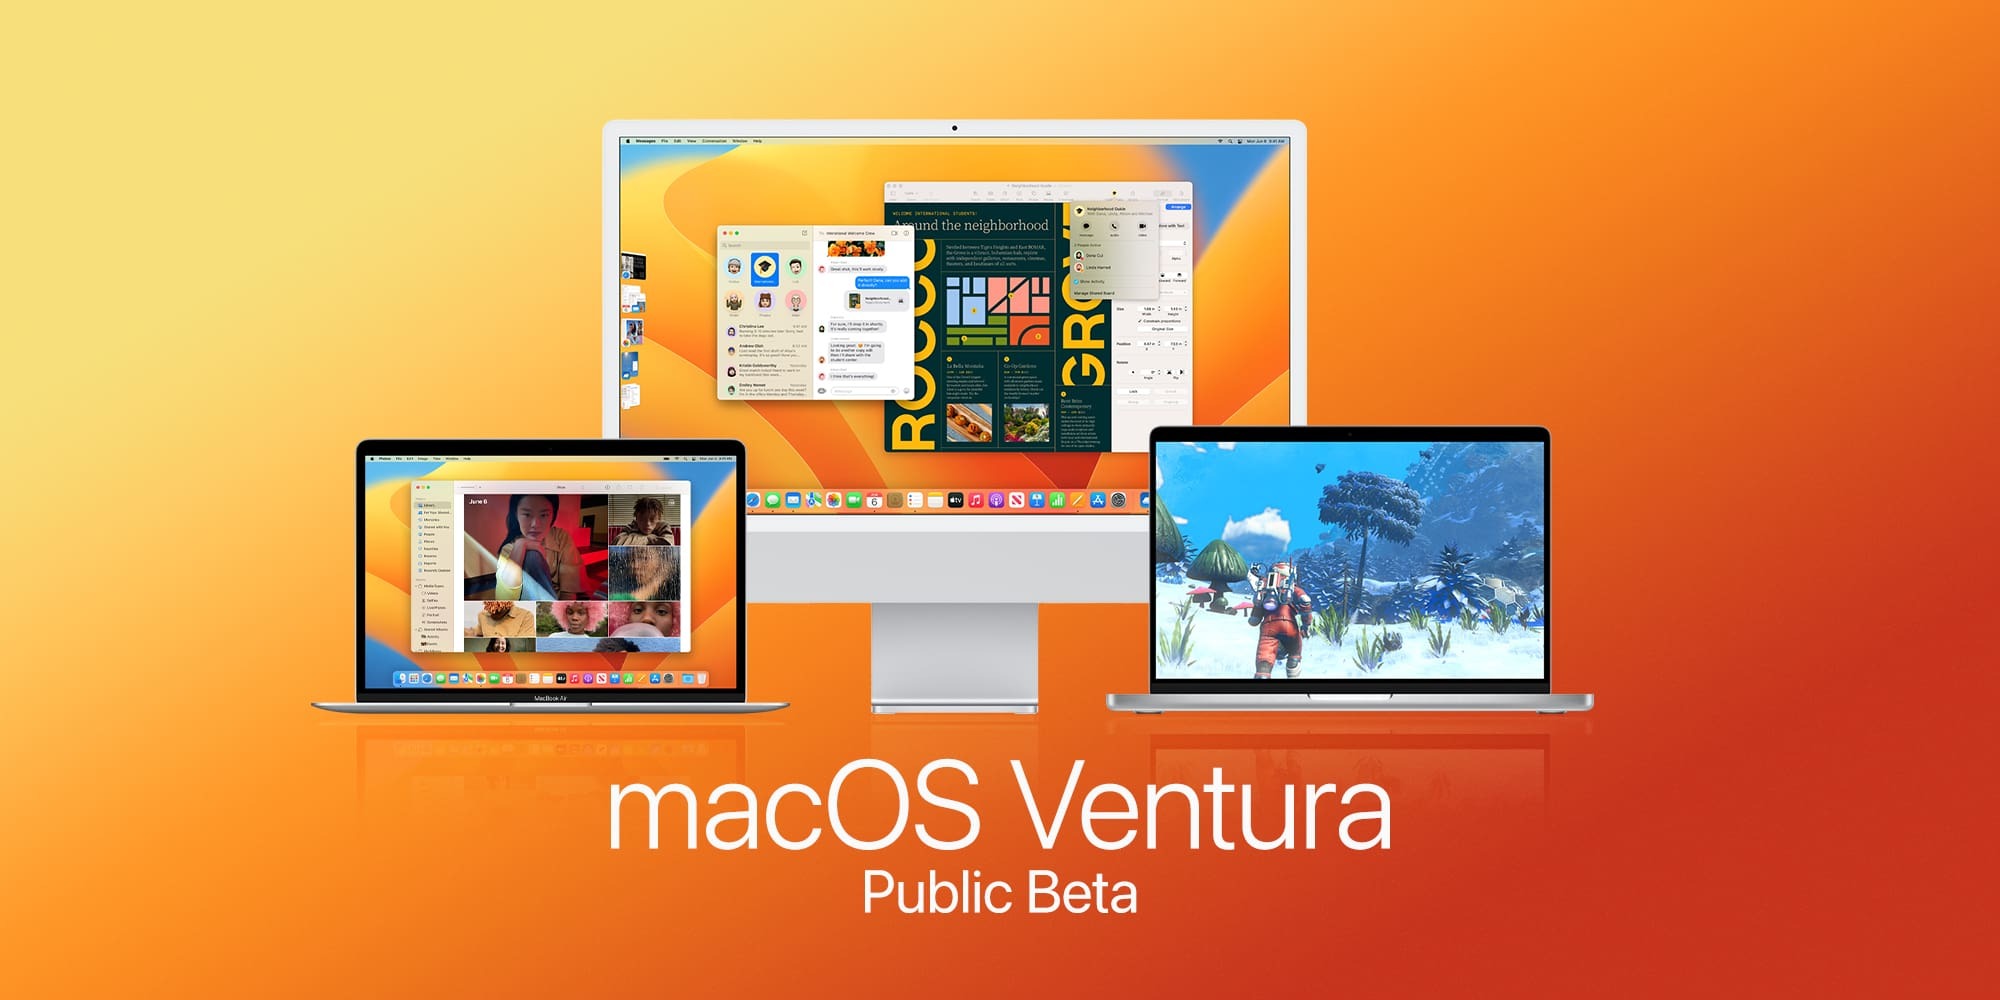 Ventura download the new version for mac